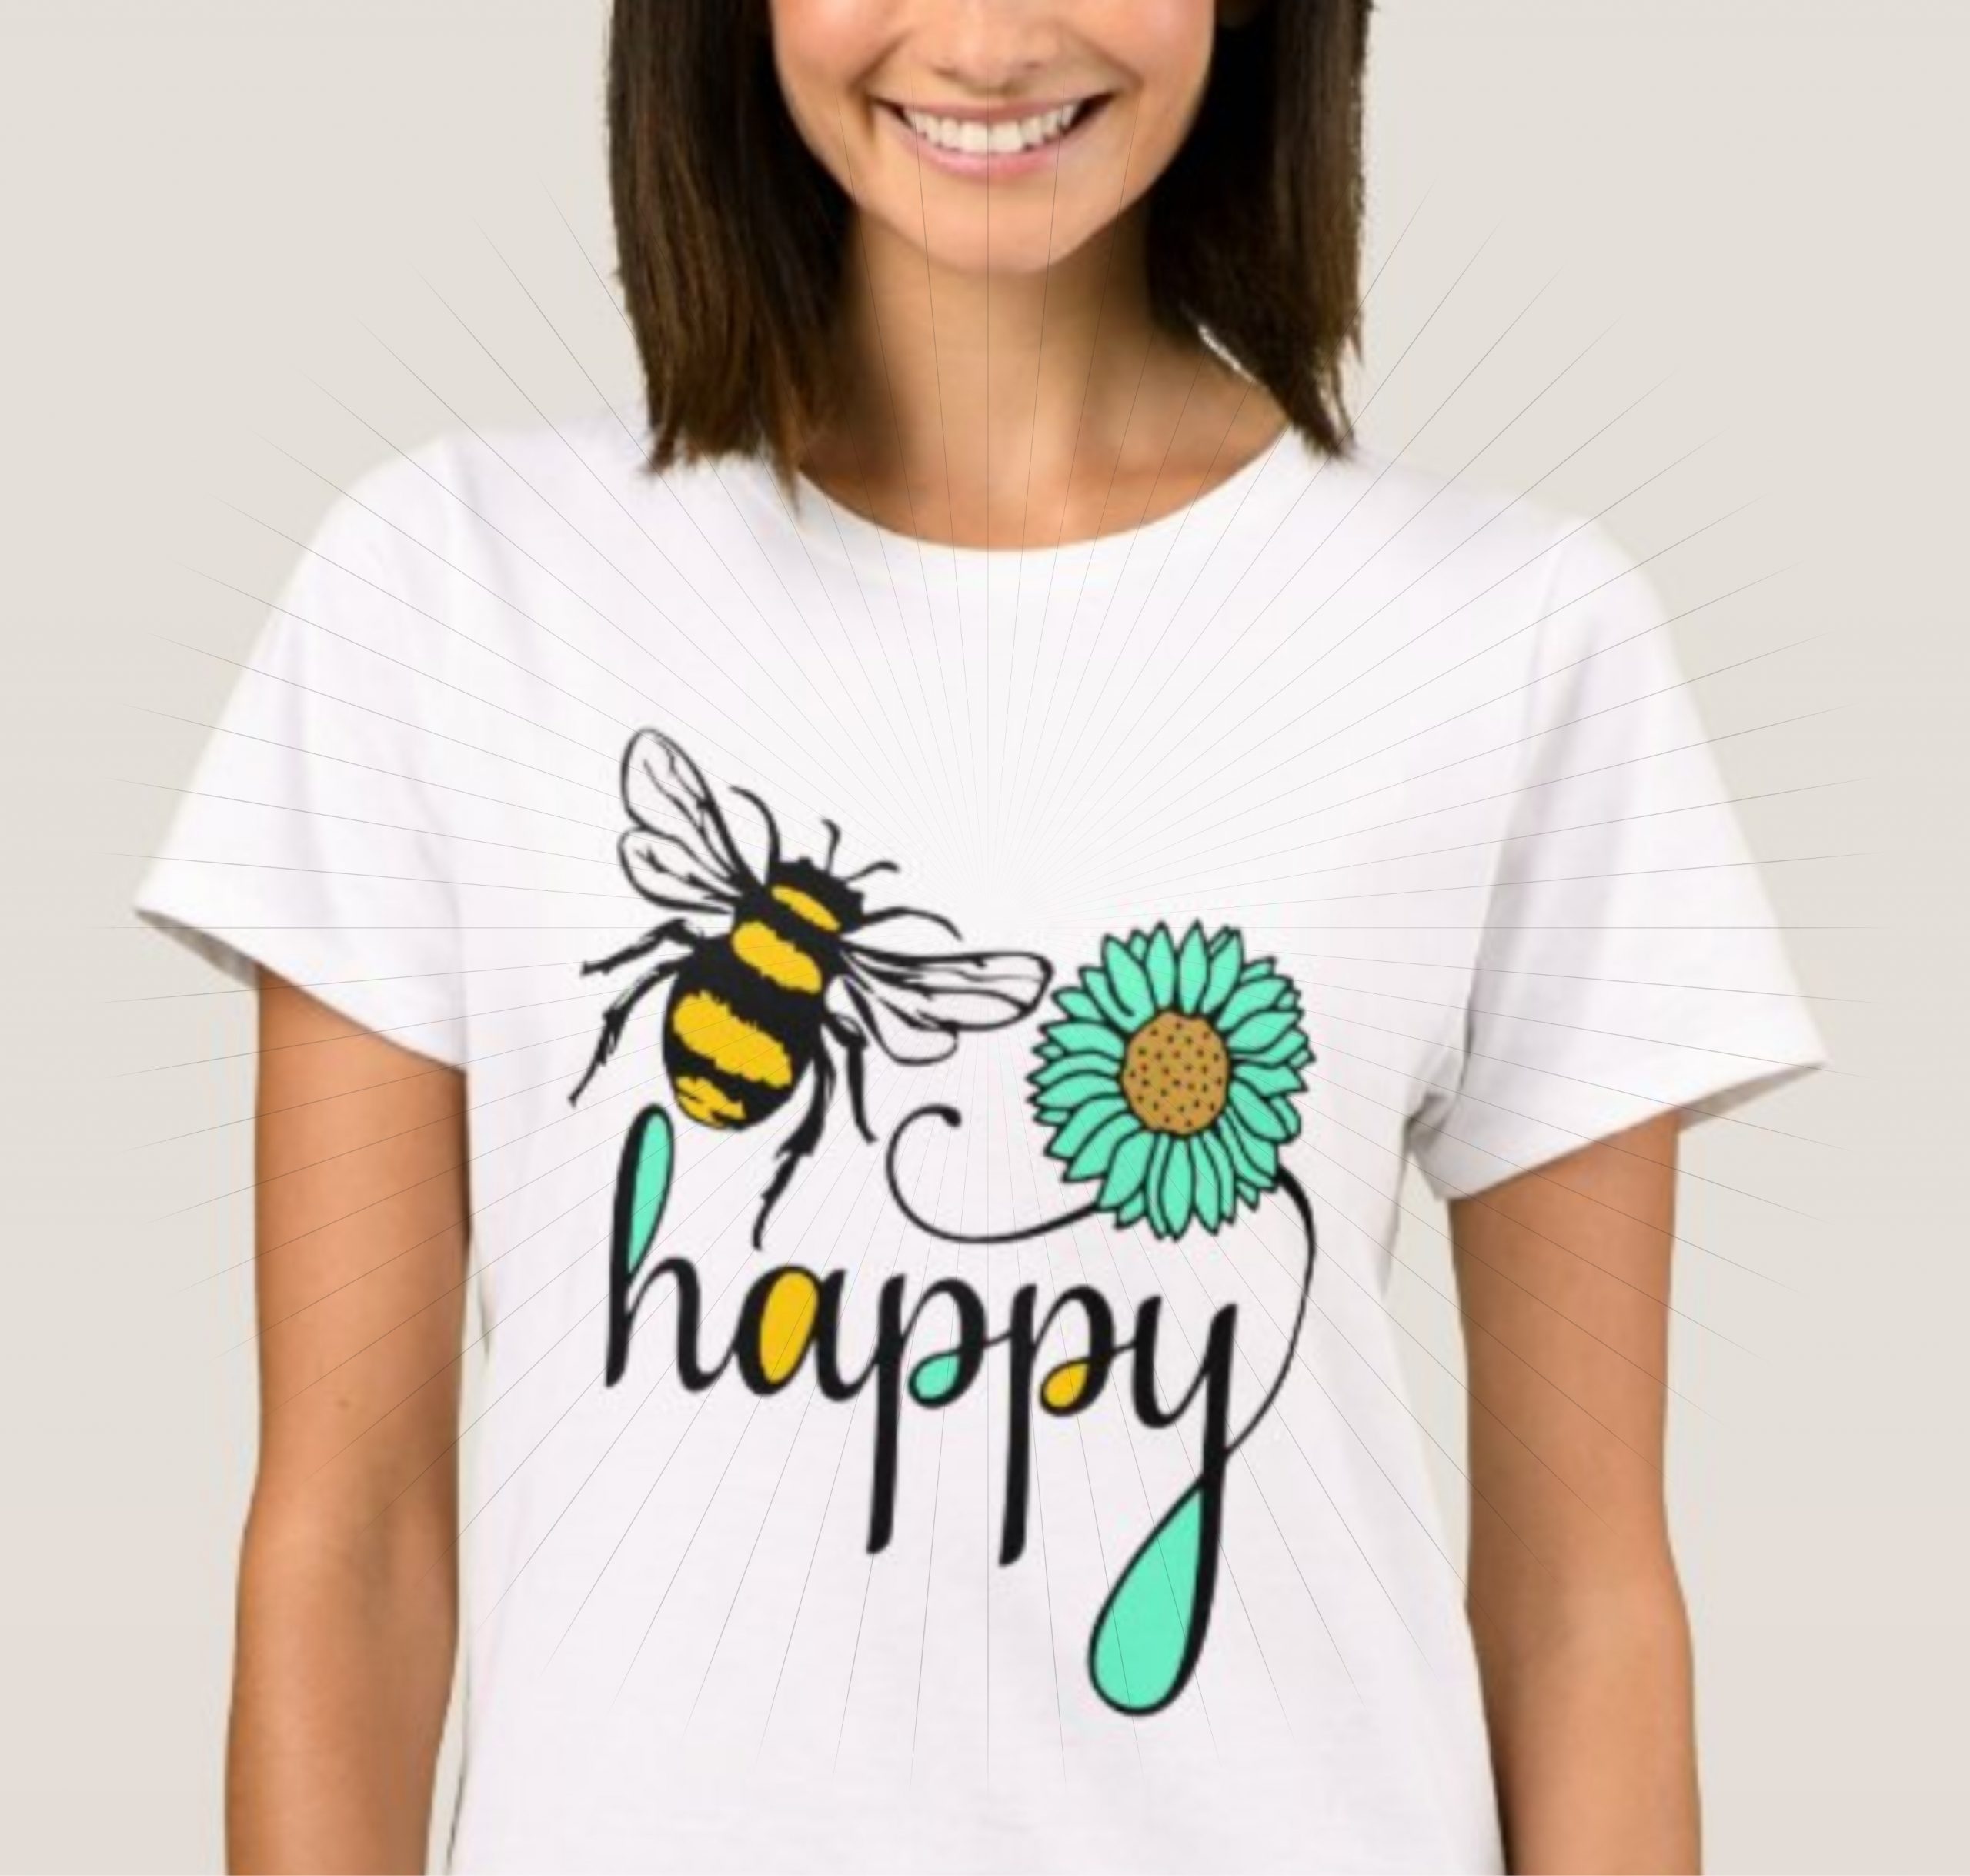 Download Bee Happy Svg Inspirational Design Png Clipart Digital For Cut Print